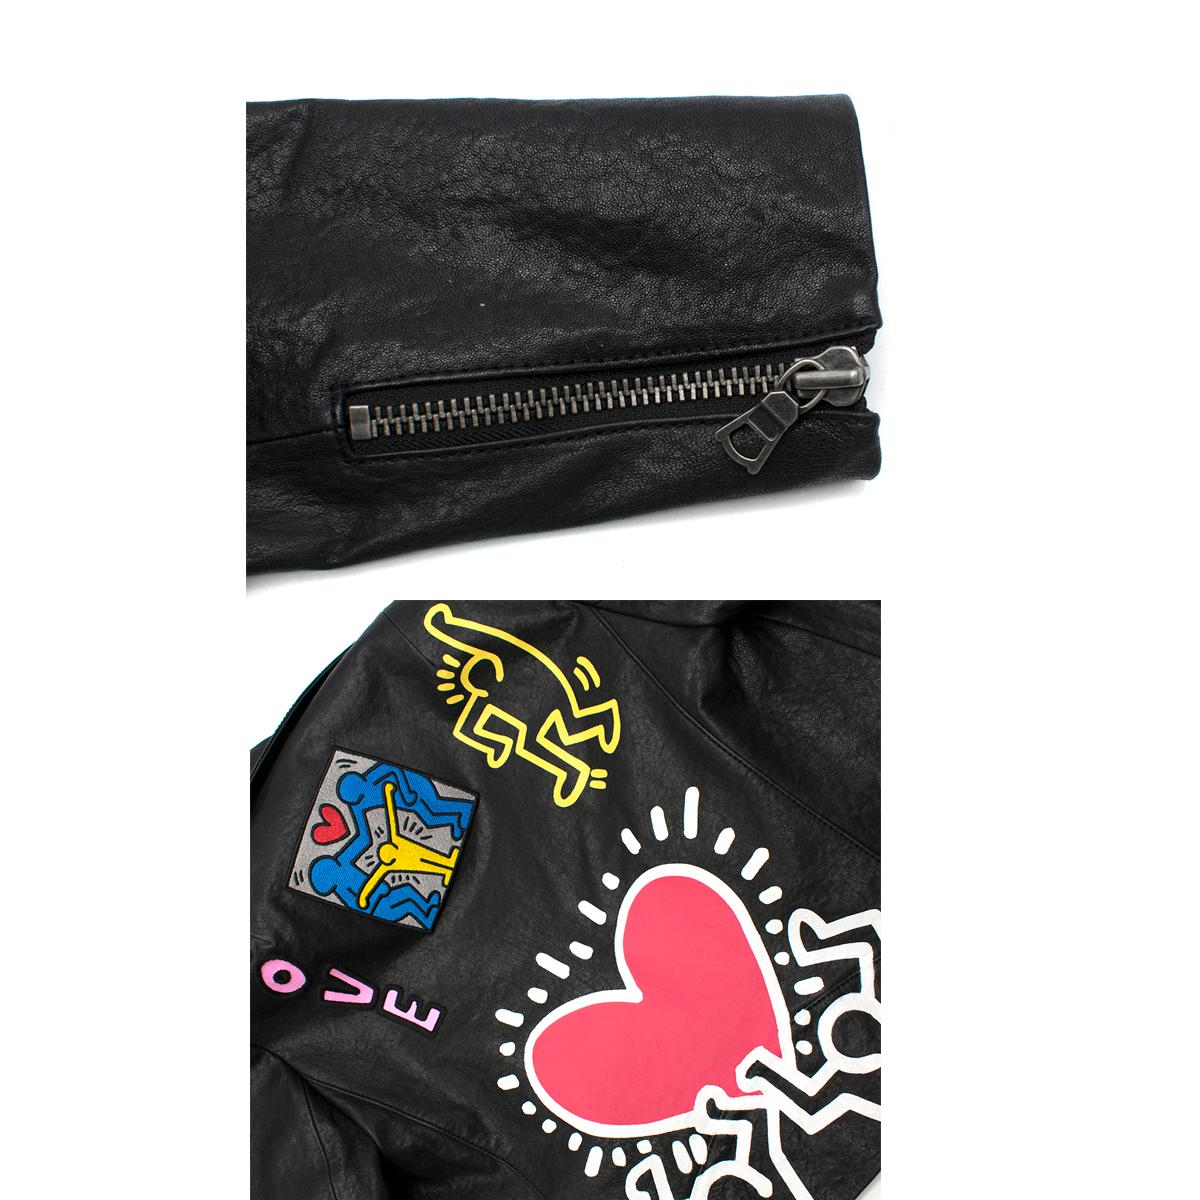 Women's Keith Haring x Alice + Olivia Cody leather jacket - Current Season XS / US 4